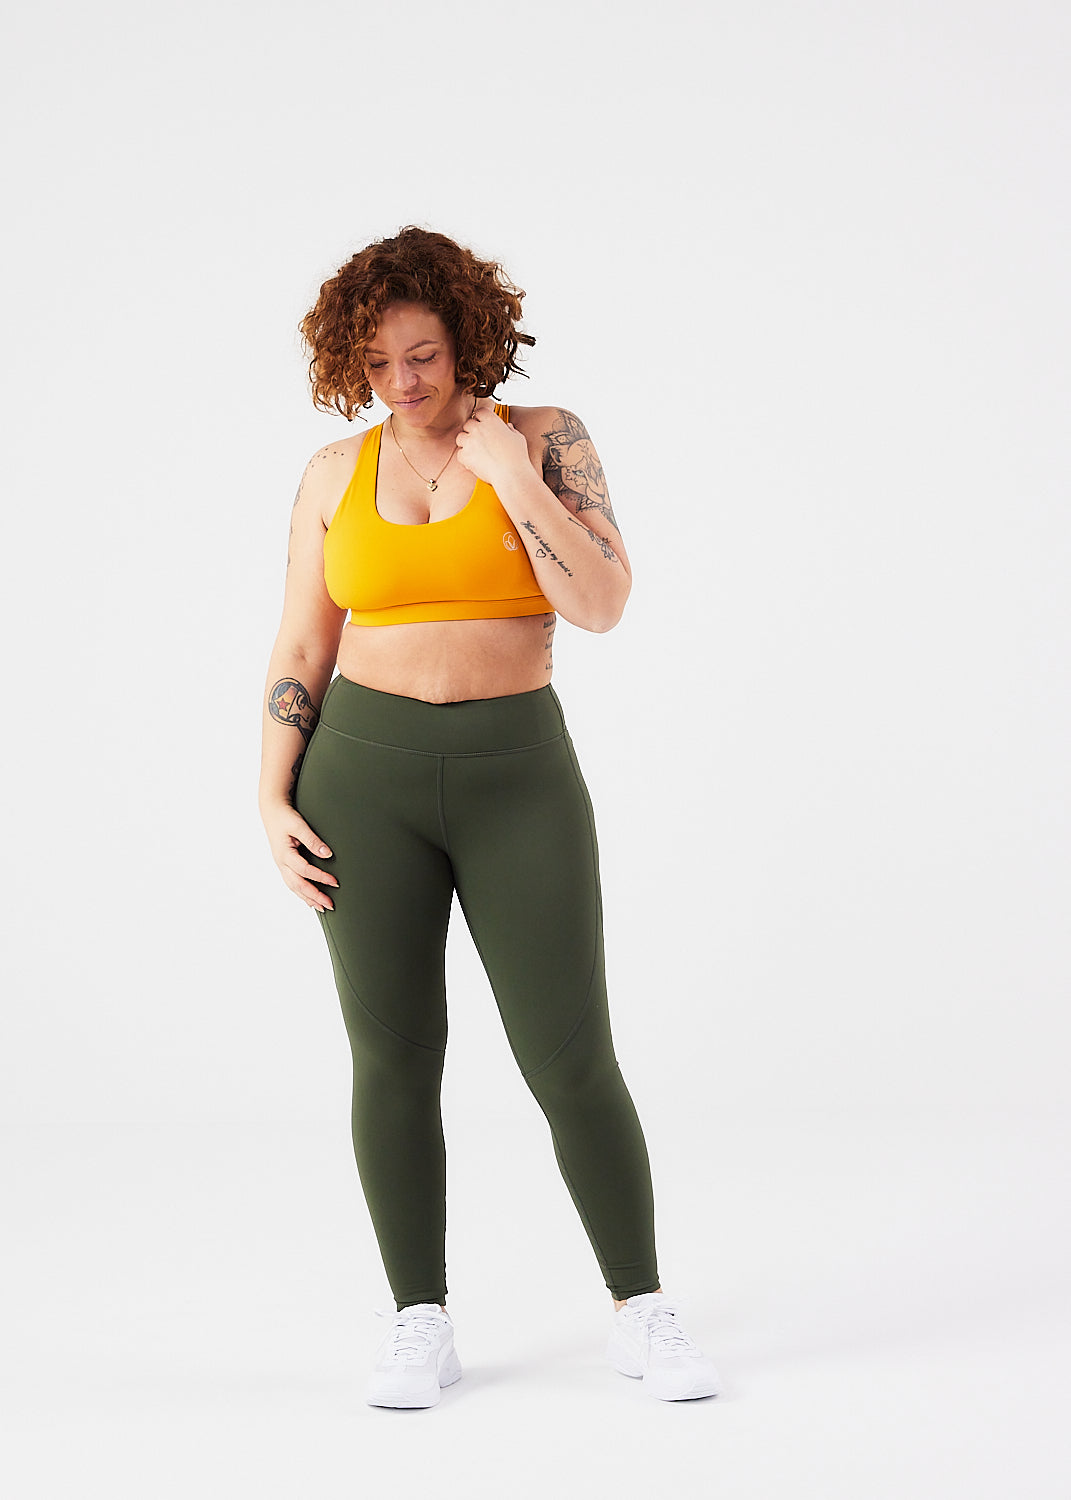 kvinde forfra med sports bh med feminine detaljer i farven sunset og grønne tights